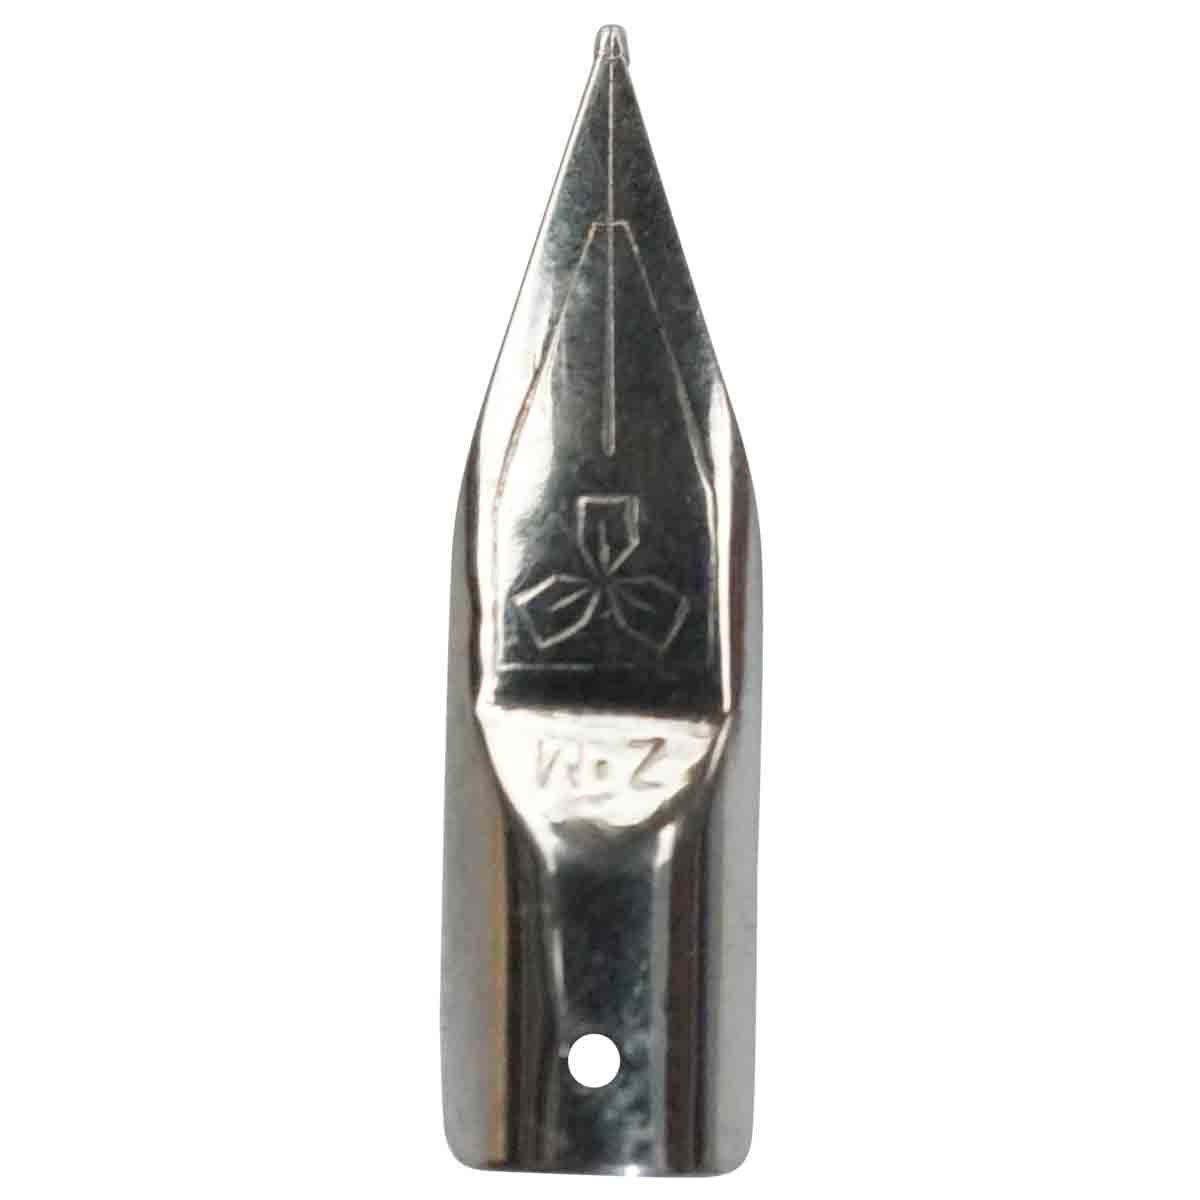 Penhouse Model: 90033 short silver color fine tipped W.Z fountain pen nib